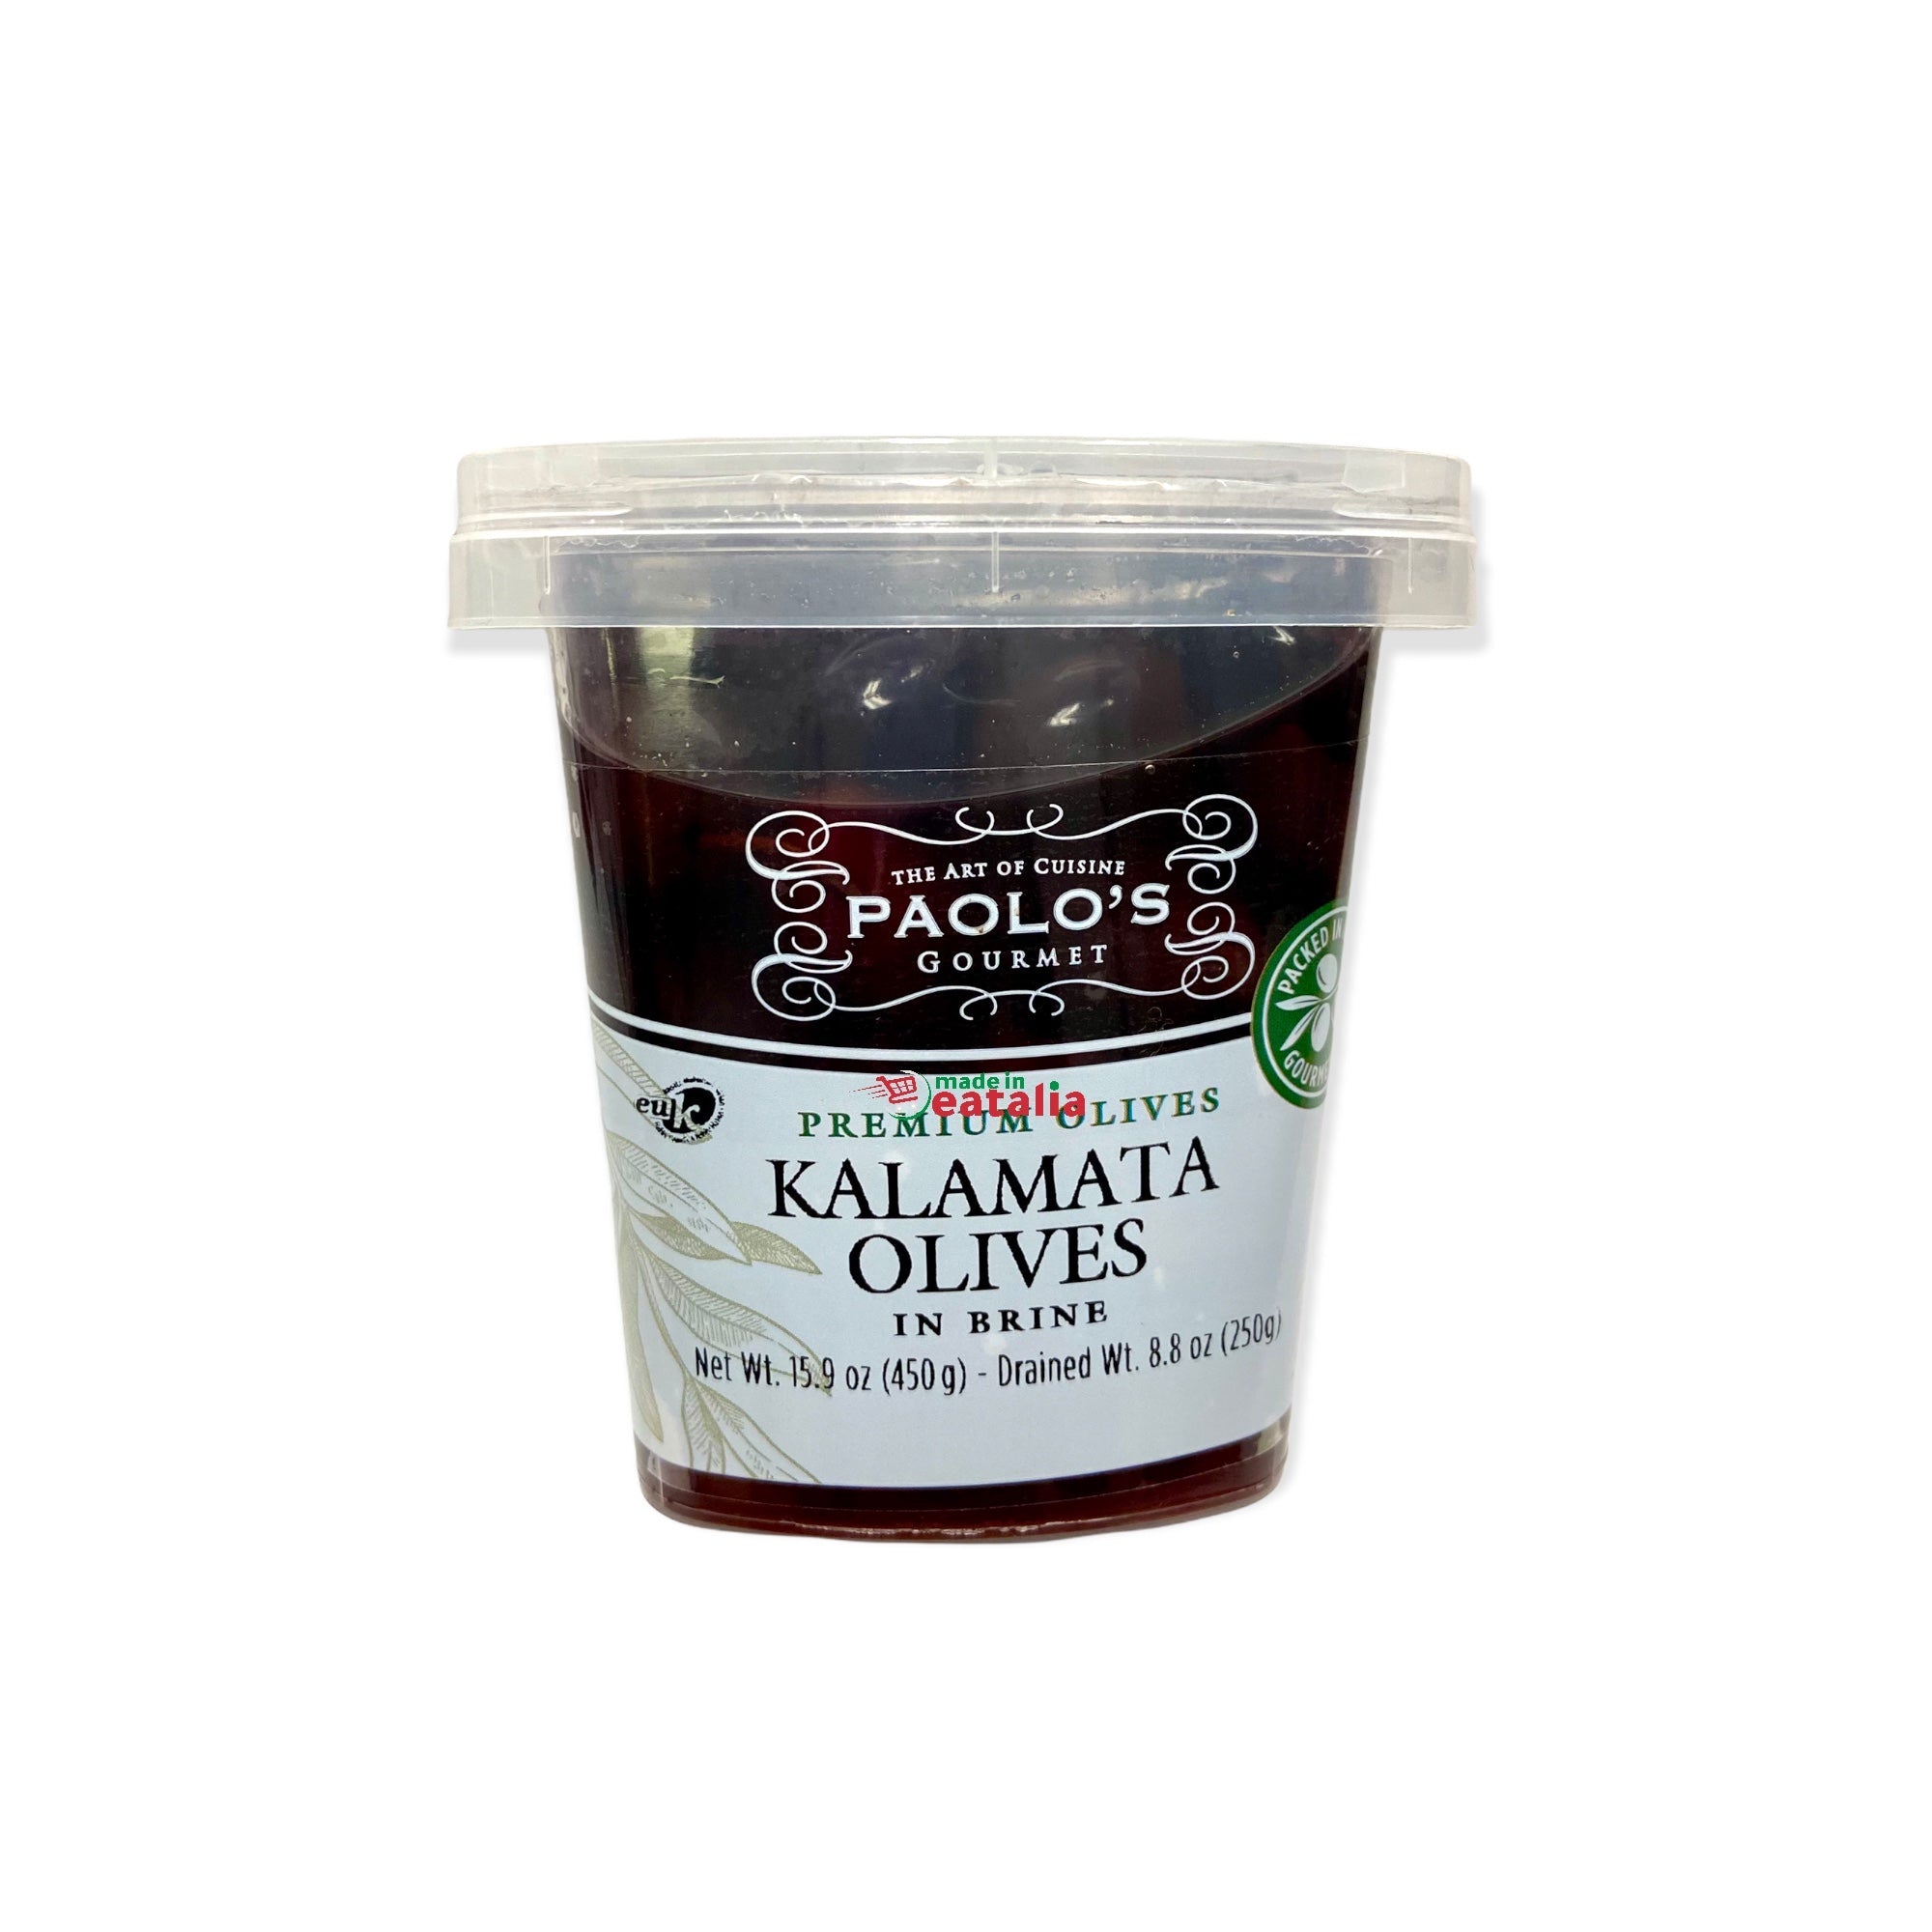 Kalamata Olives Premium in Brine Net Weight 250g